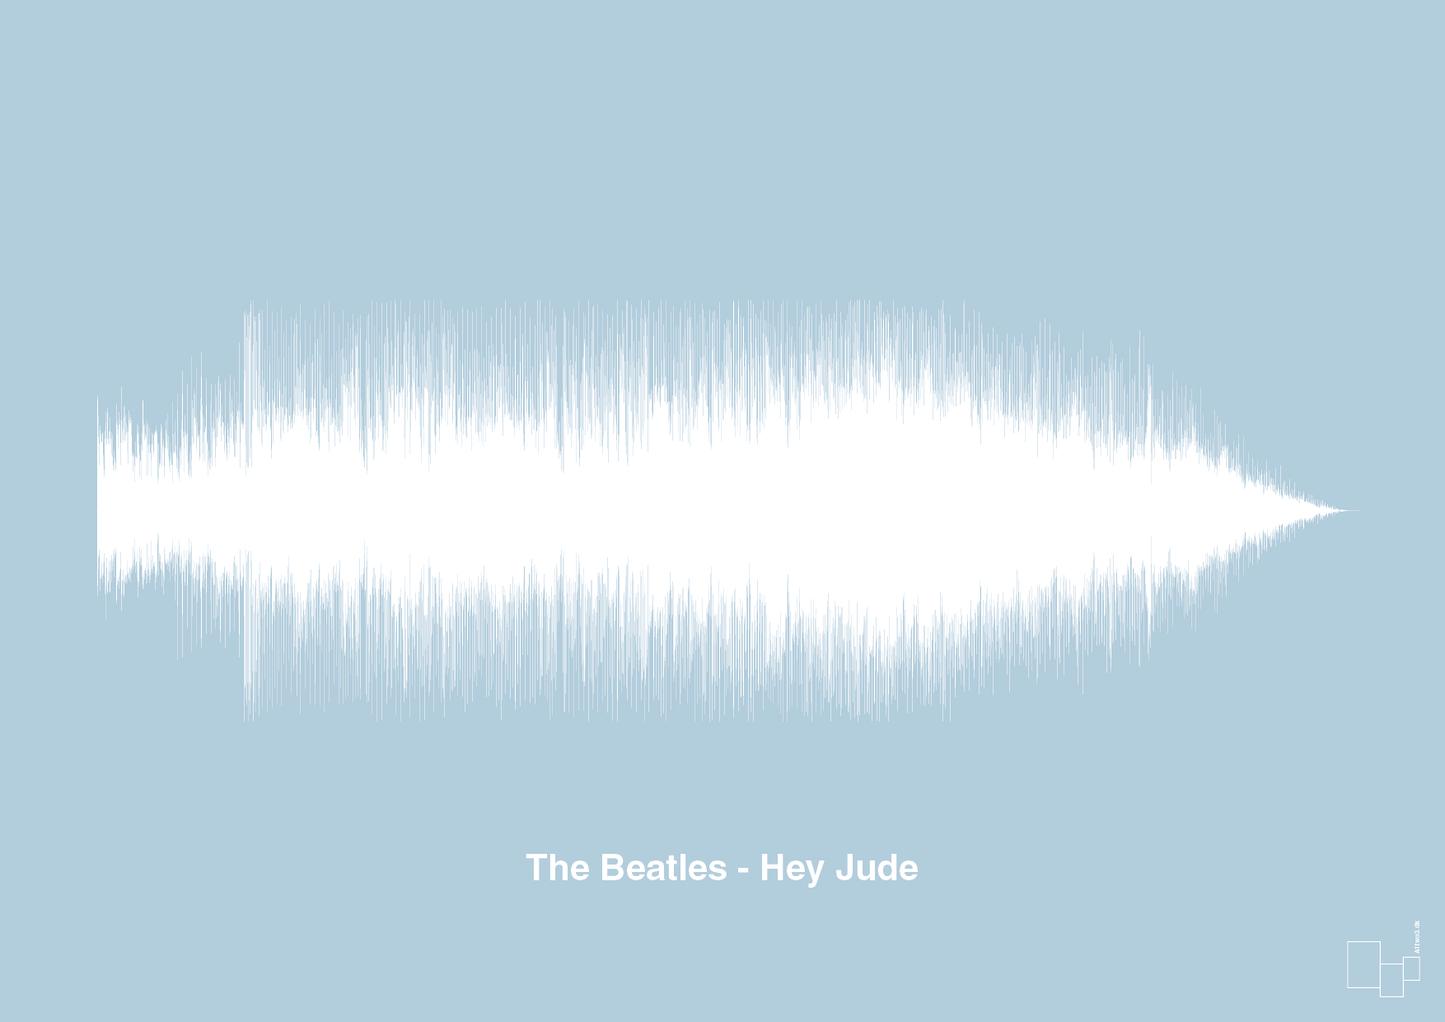 the beatles - hey jude - Plakat med Musik i Heavenly Blue